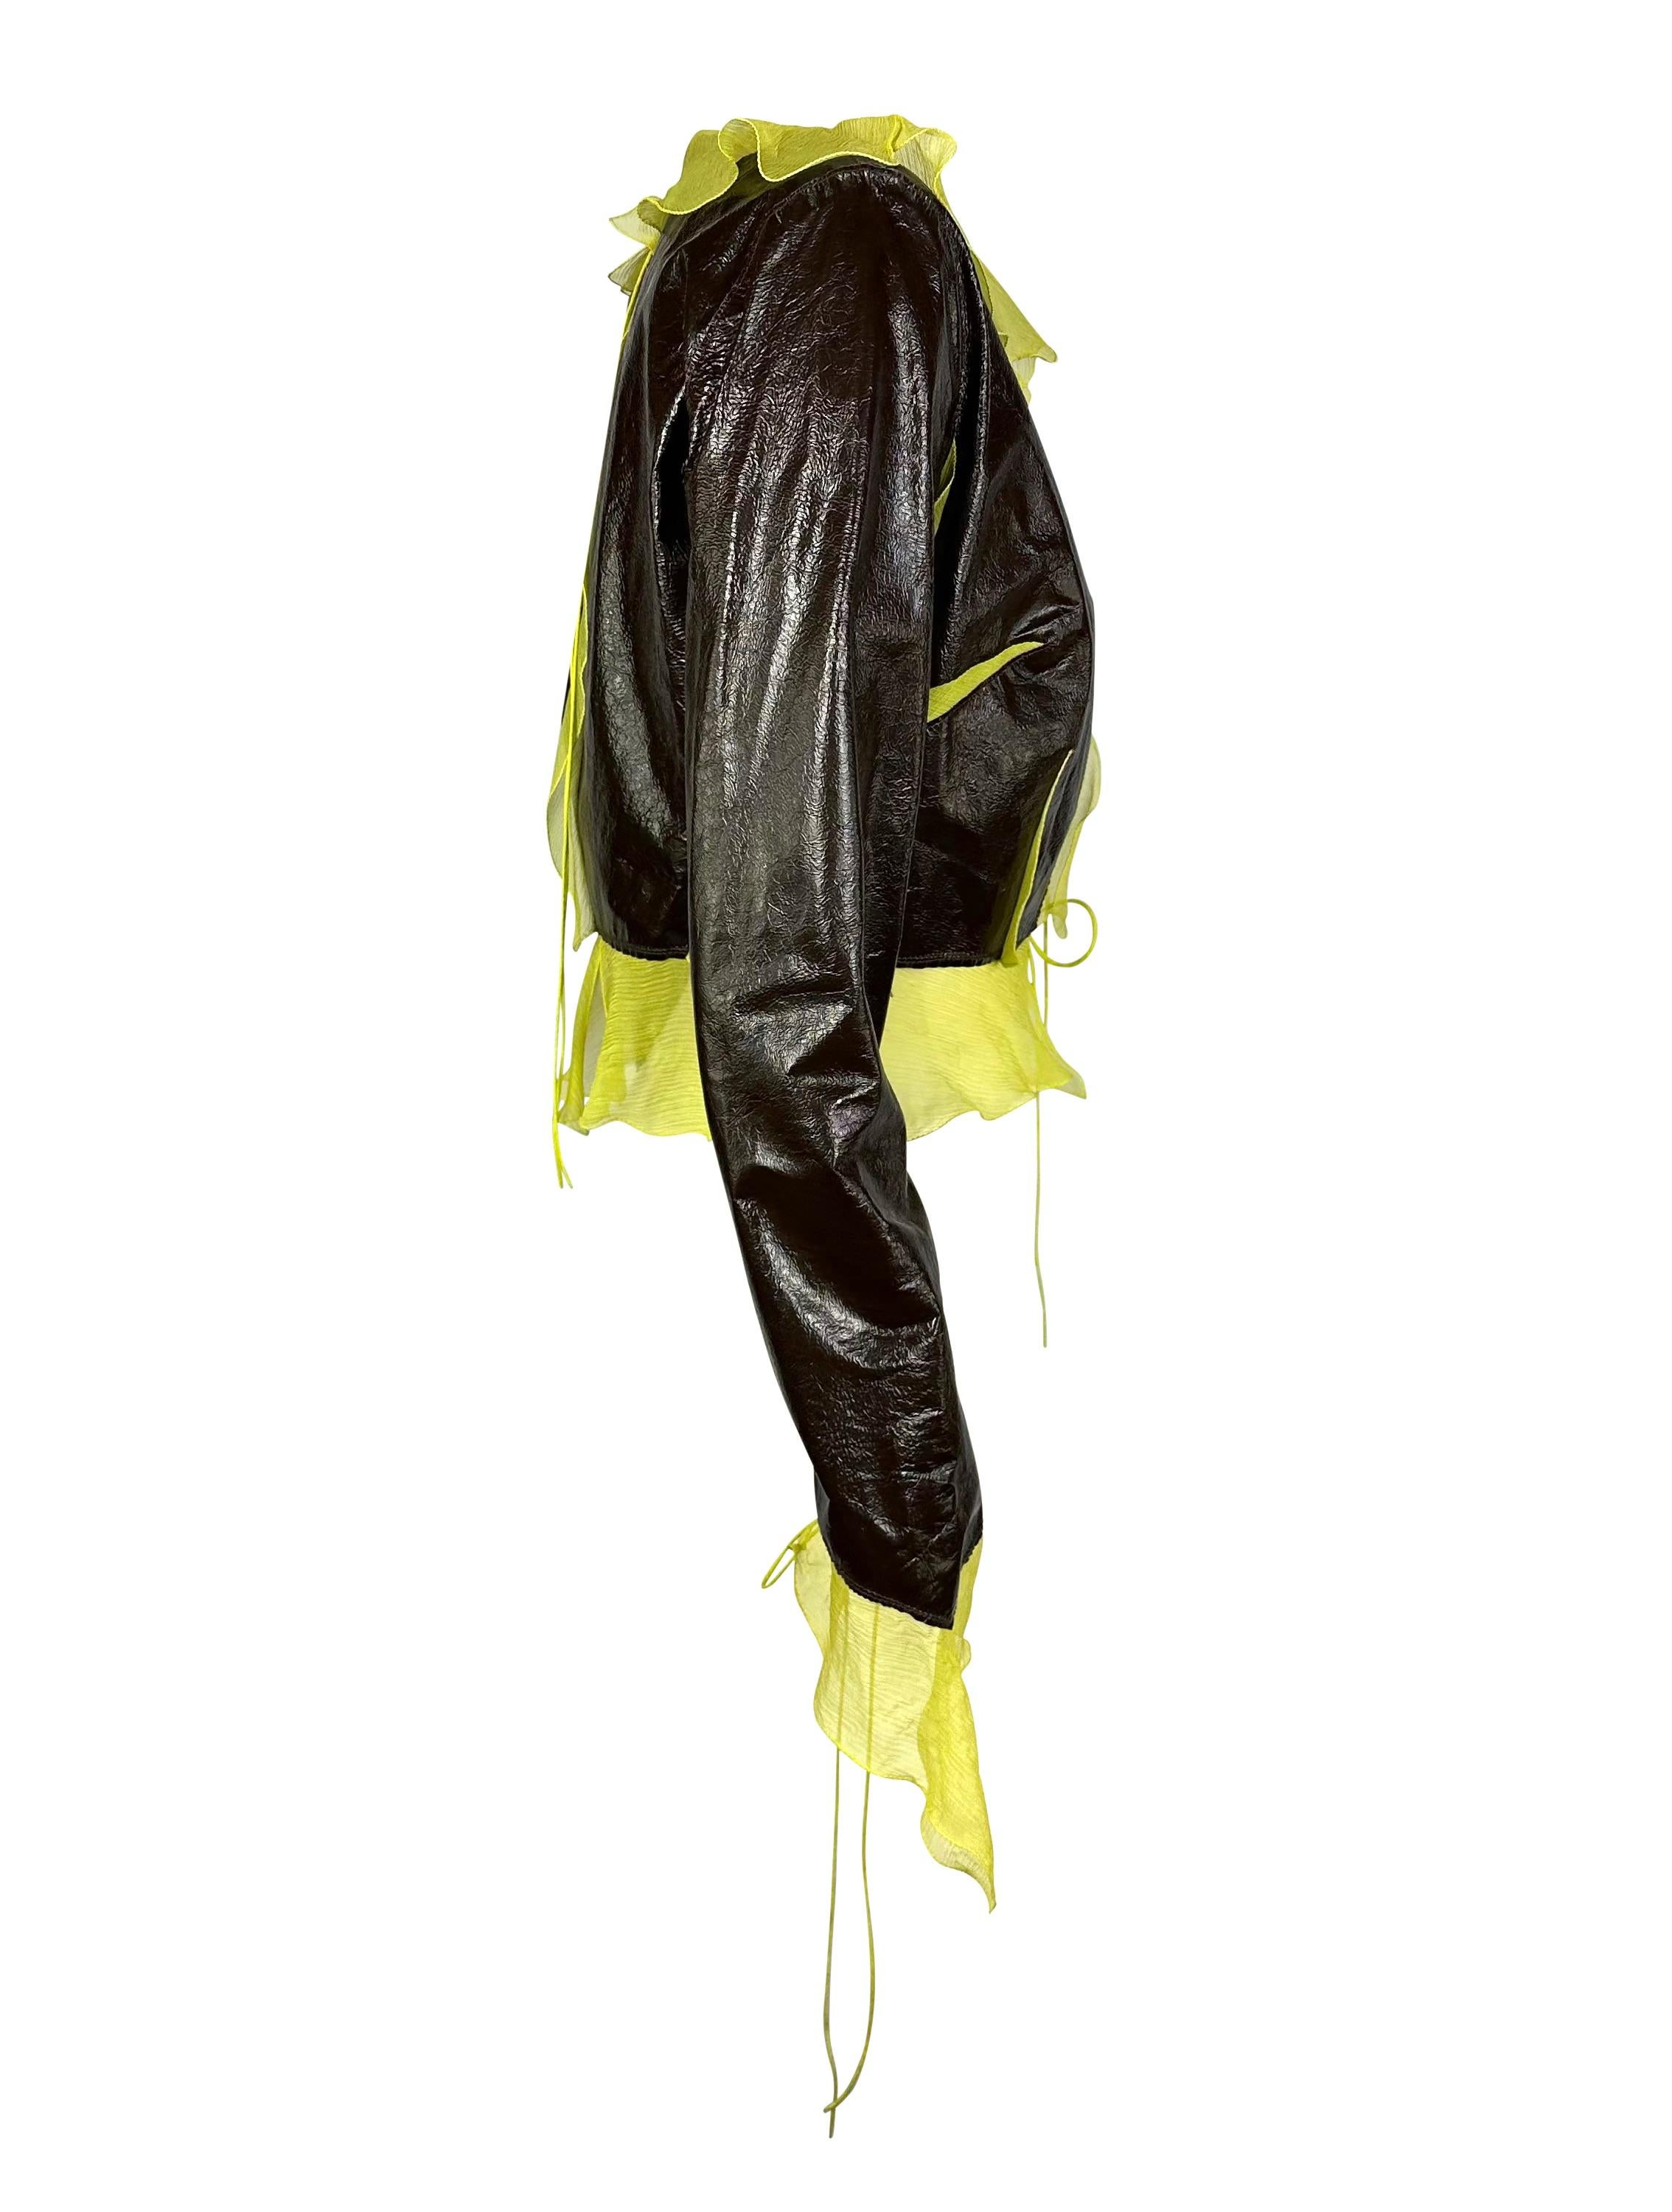 Women's S/S 2000 Fendi by Karl Lagerfeld Ad Patent Leather Lime Silk Chiffon Jacket